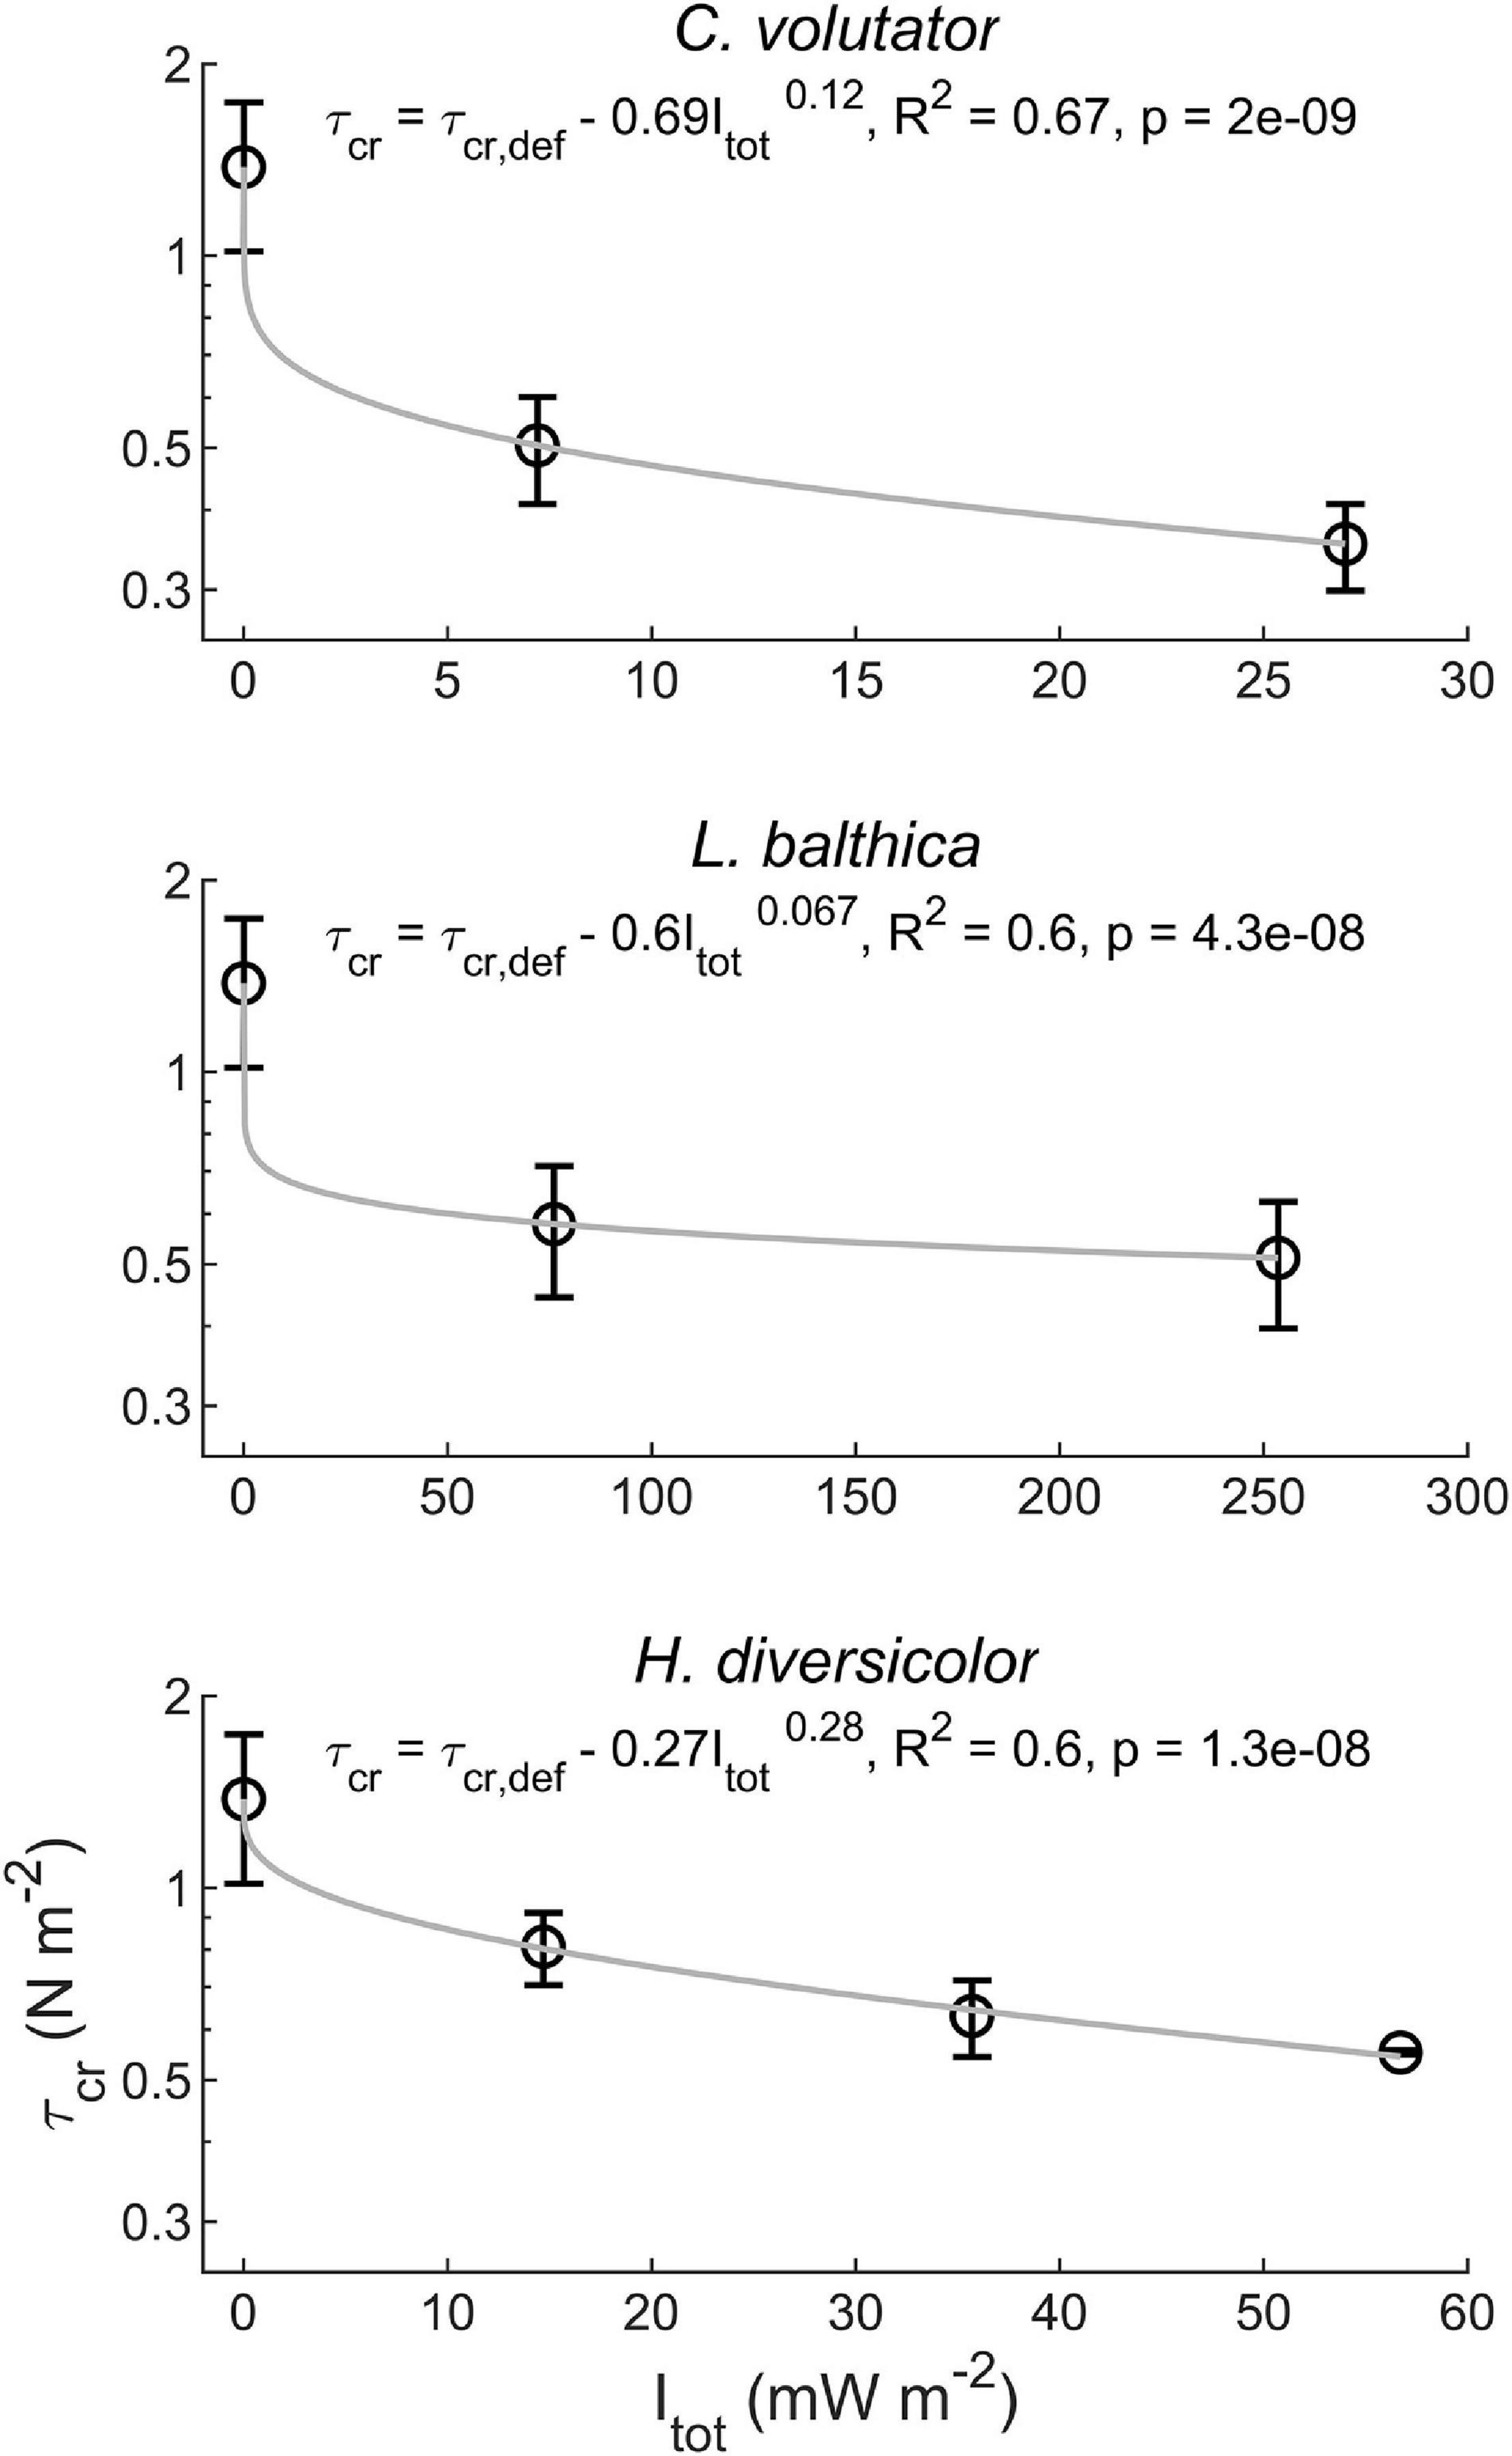 Frontiers  Sediment Bulk Density Effects on Benthic Macrofauna Burrowing  and Bioturbation Behavior